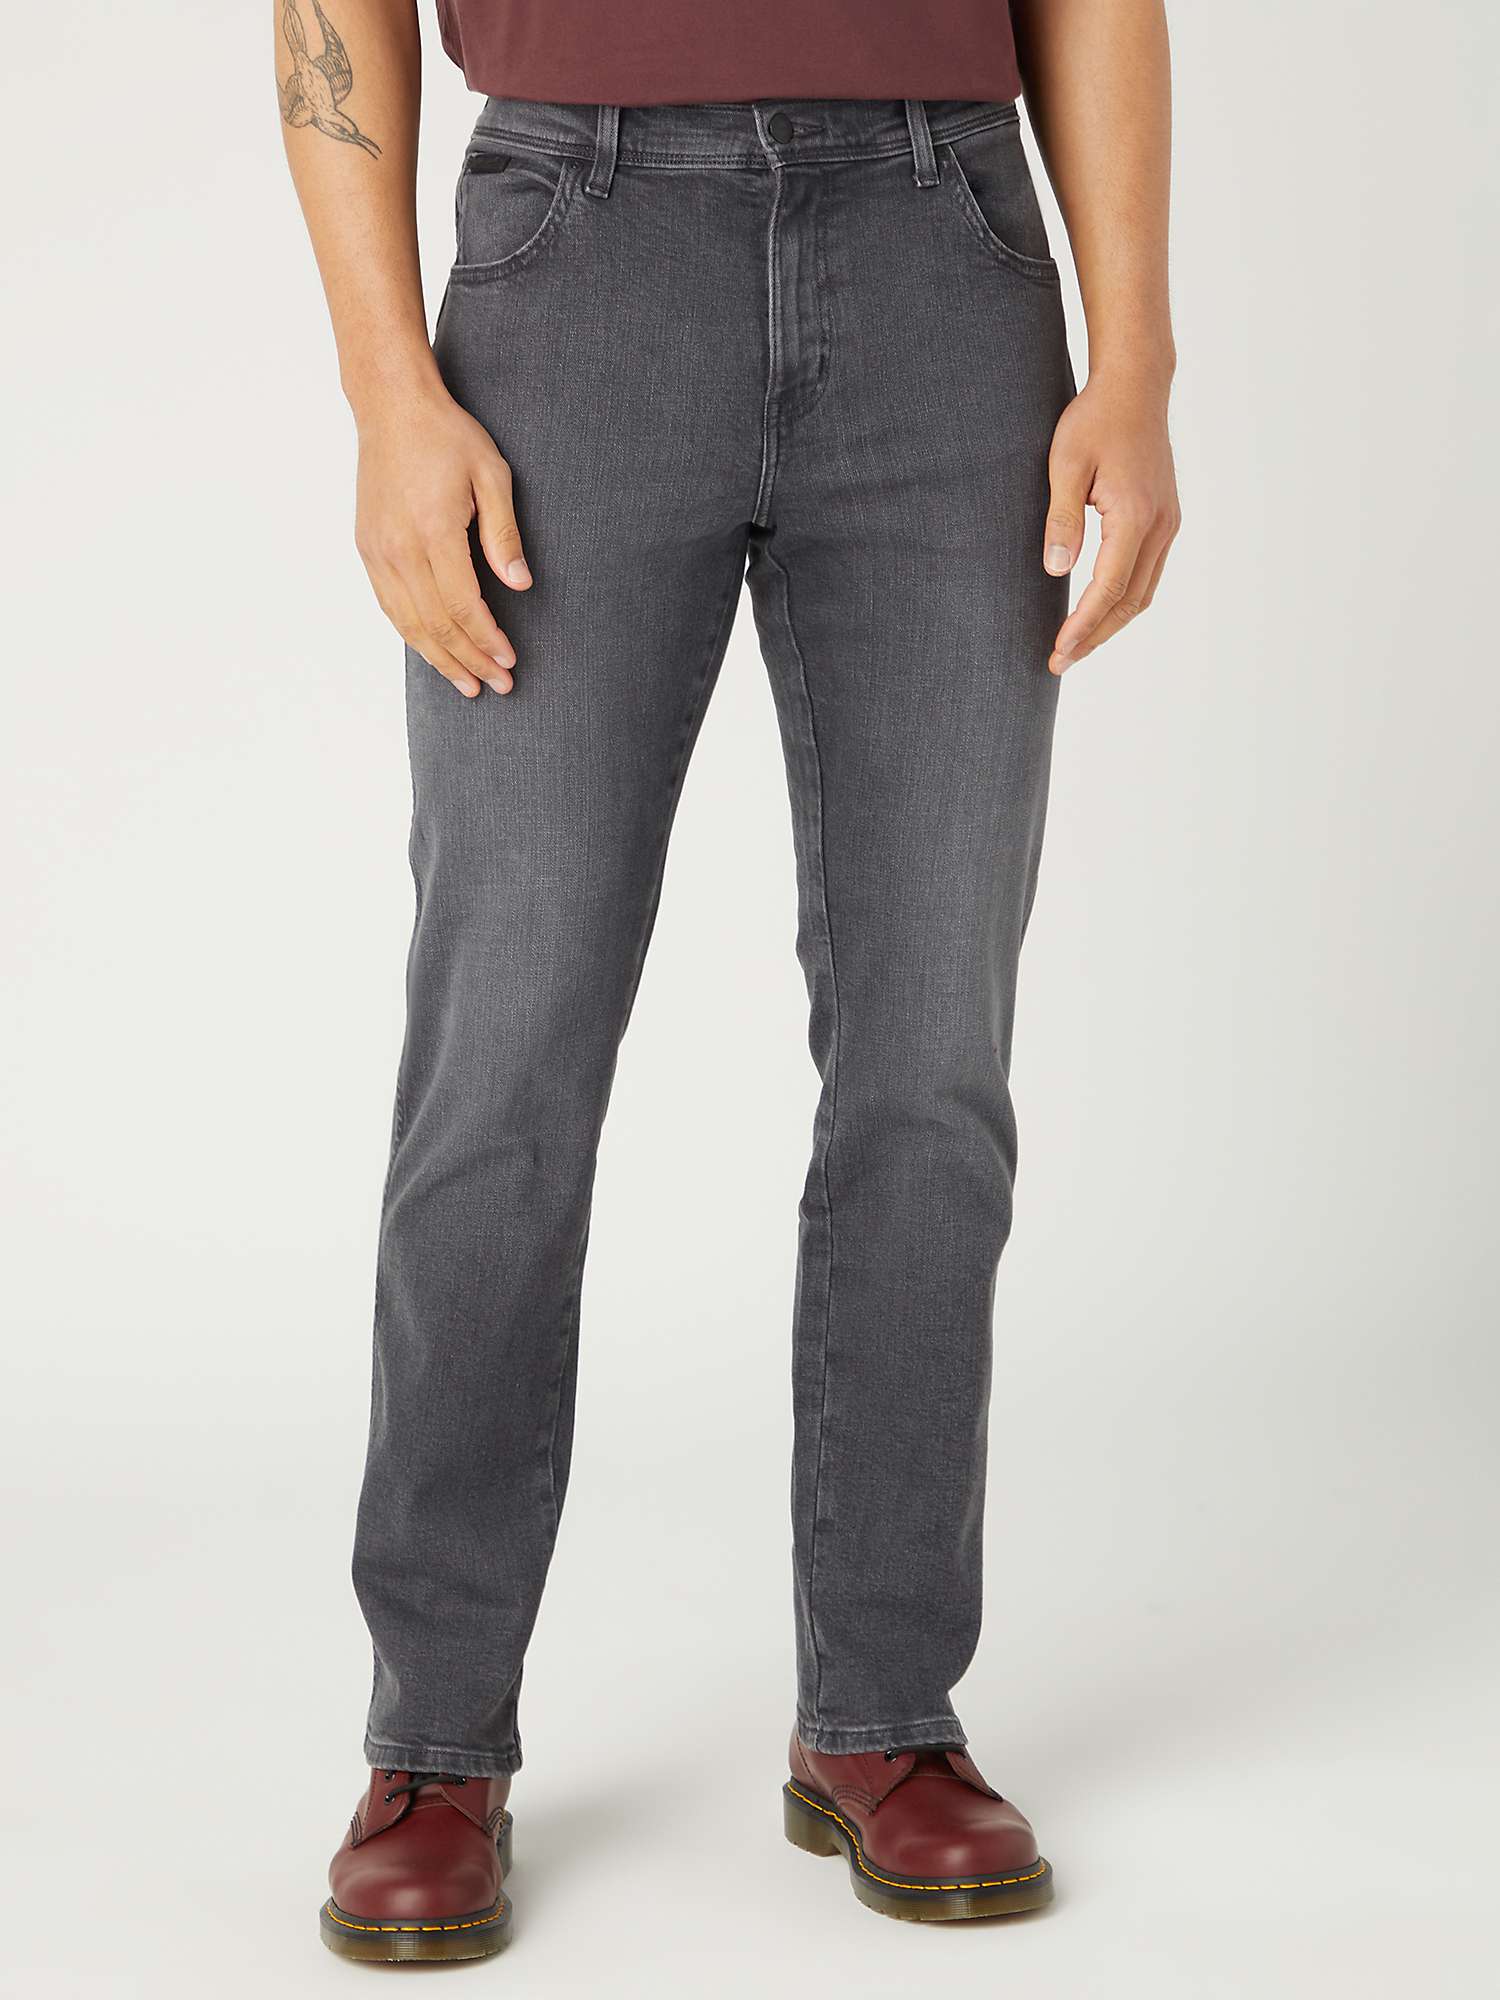 Buy Wrangler Texas Falcon Regular Fit Jeans, Grey Online at johnlewis.com